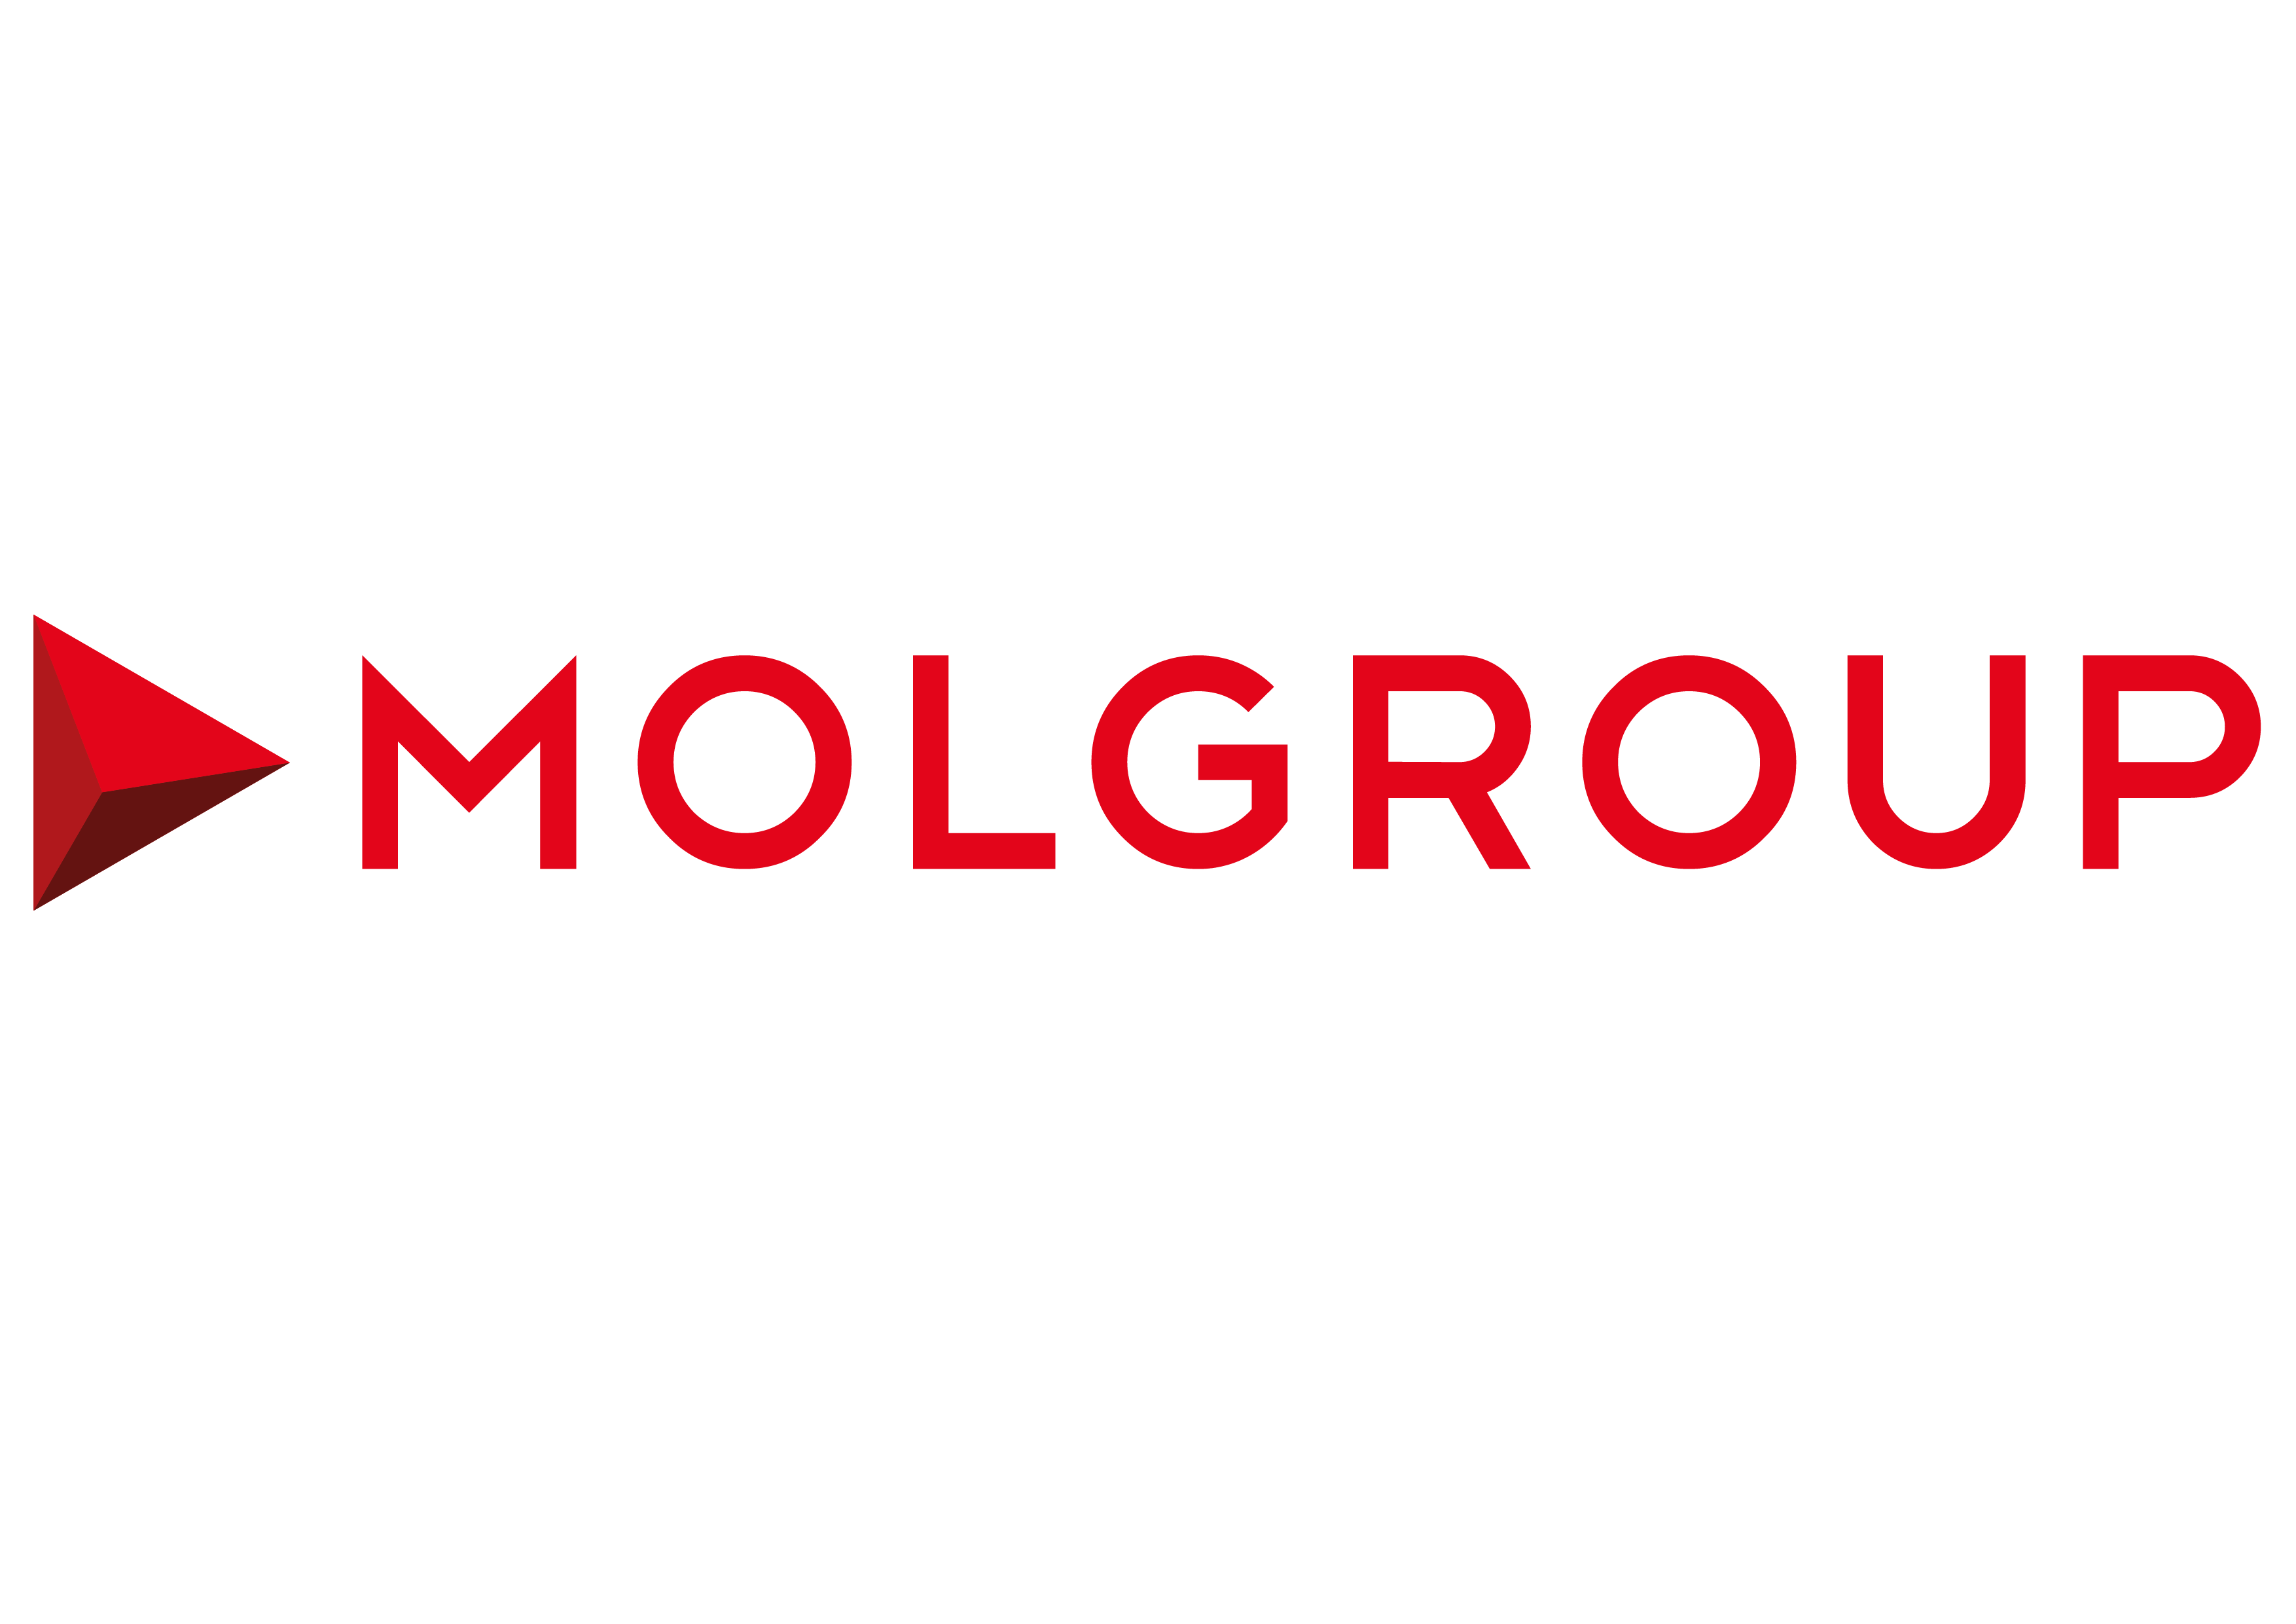 mol logo